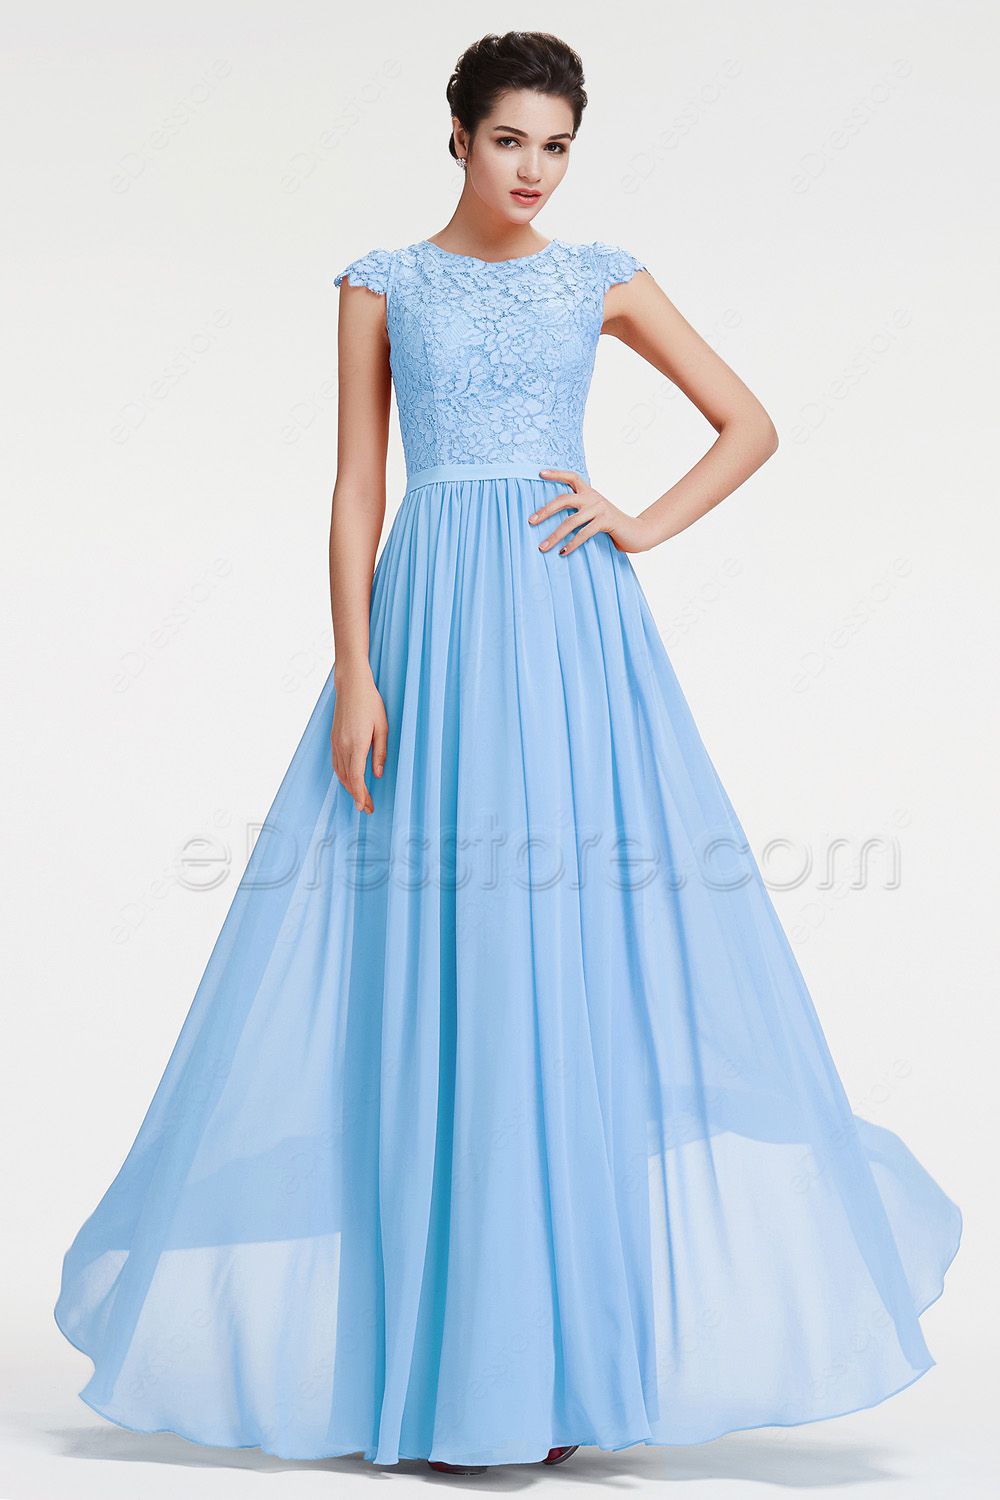 blue modest prom dresses